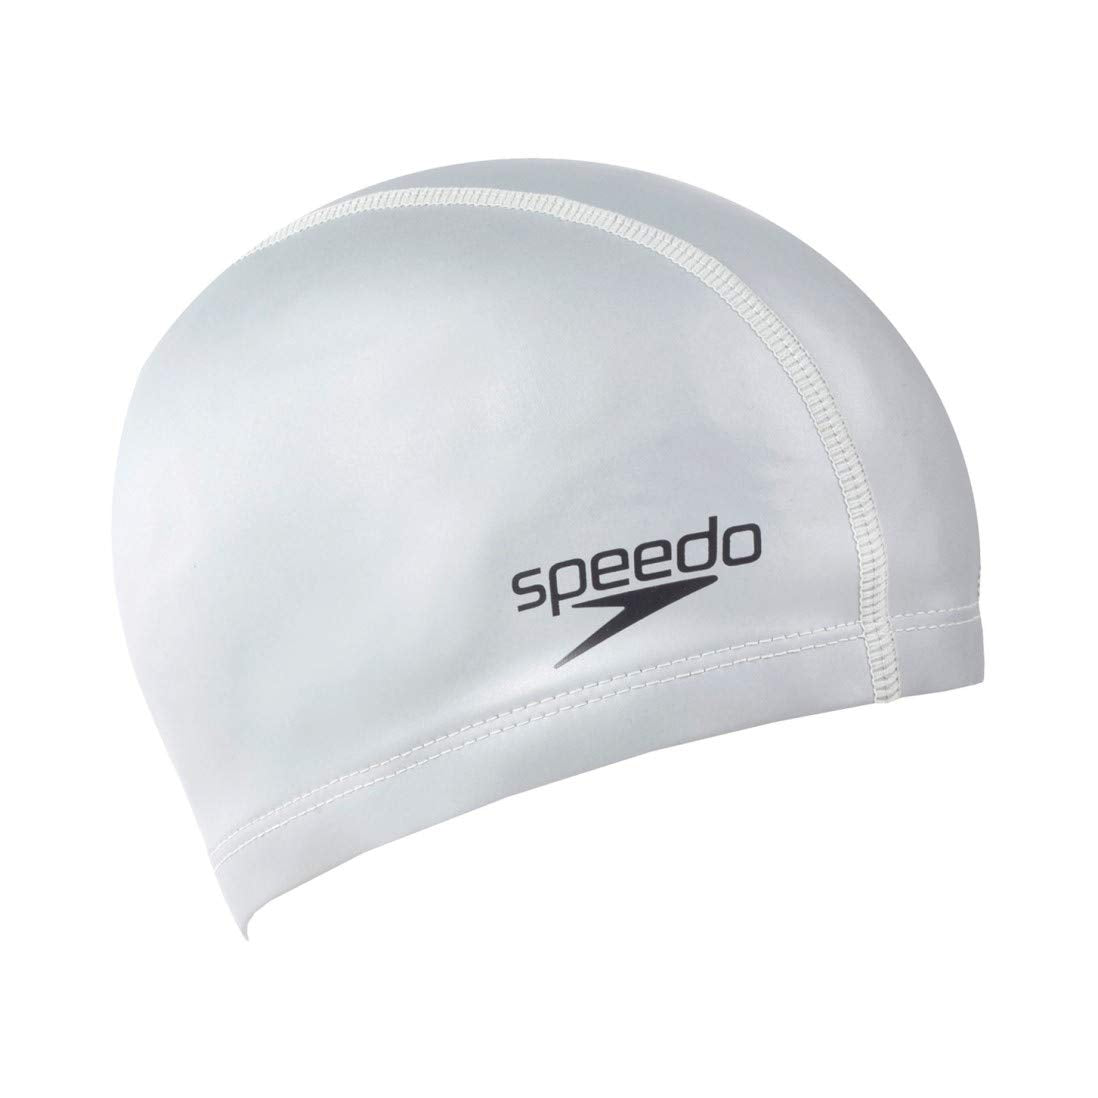 Speedo Ultra Pace Swimming Cap (Silver) - Best Price online Prokicksports.com